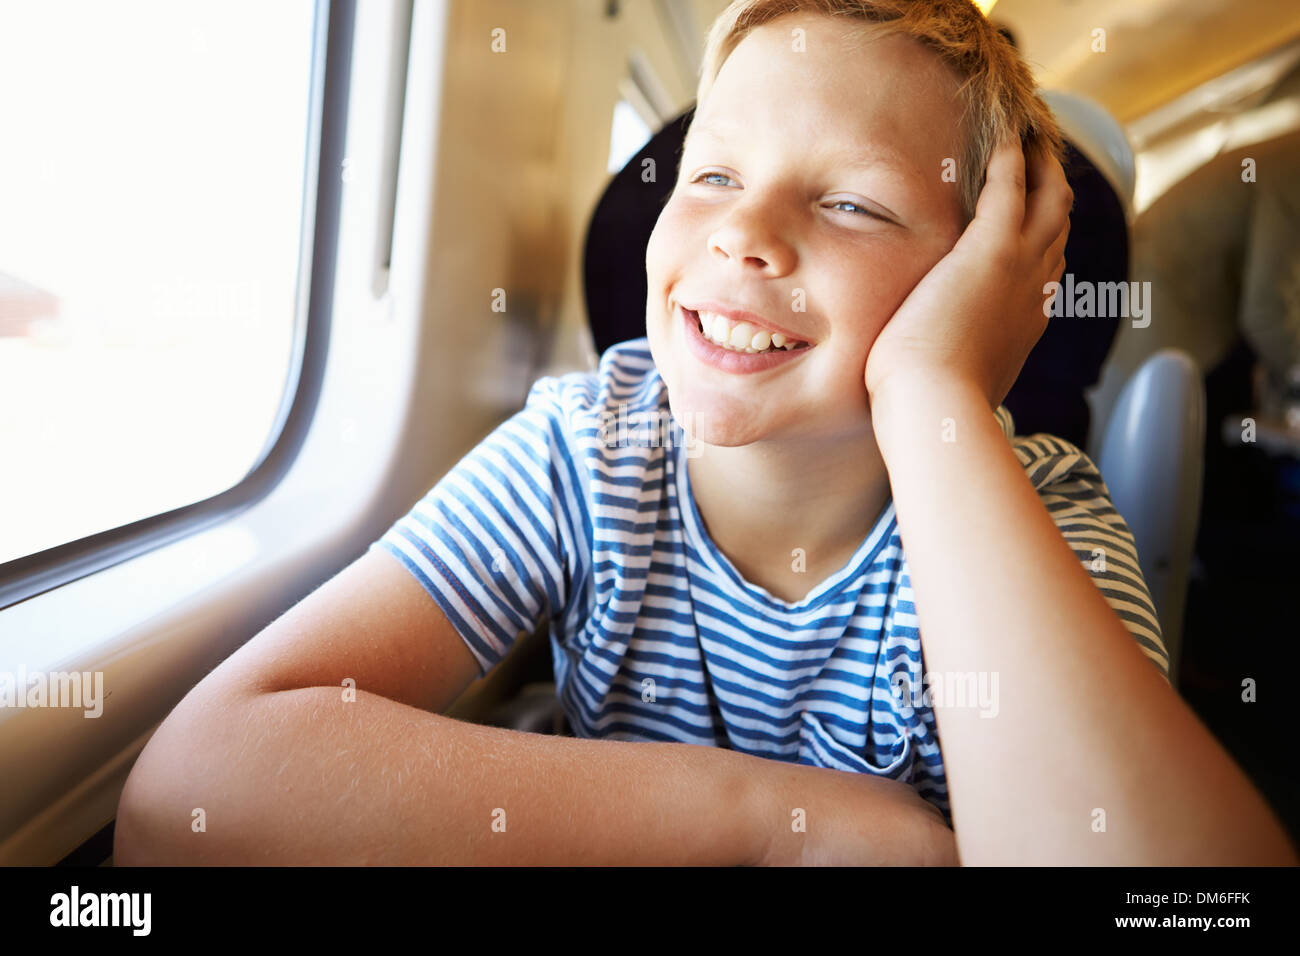 Boy Relaxing On Voyage en Train Banque D'Images